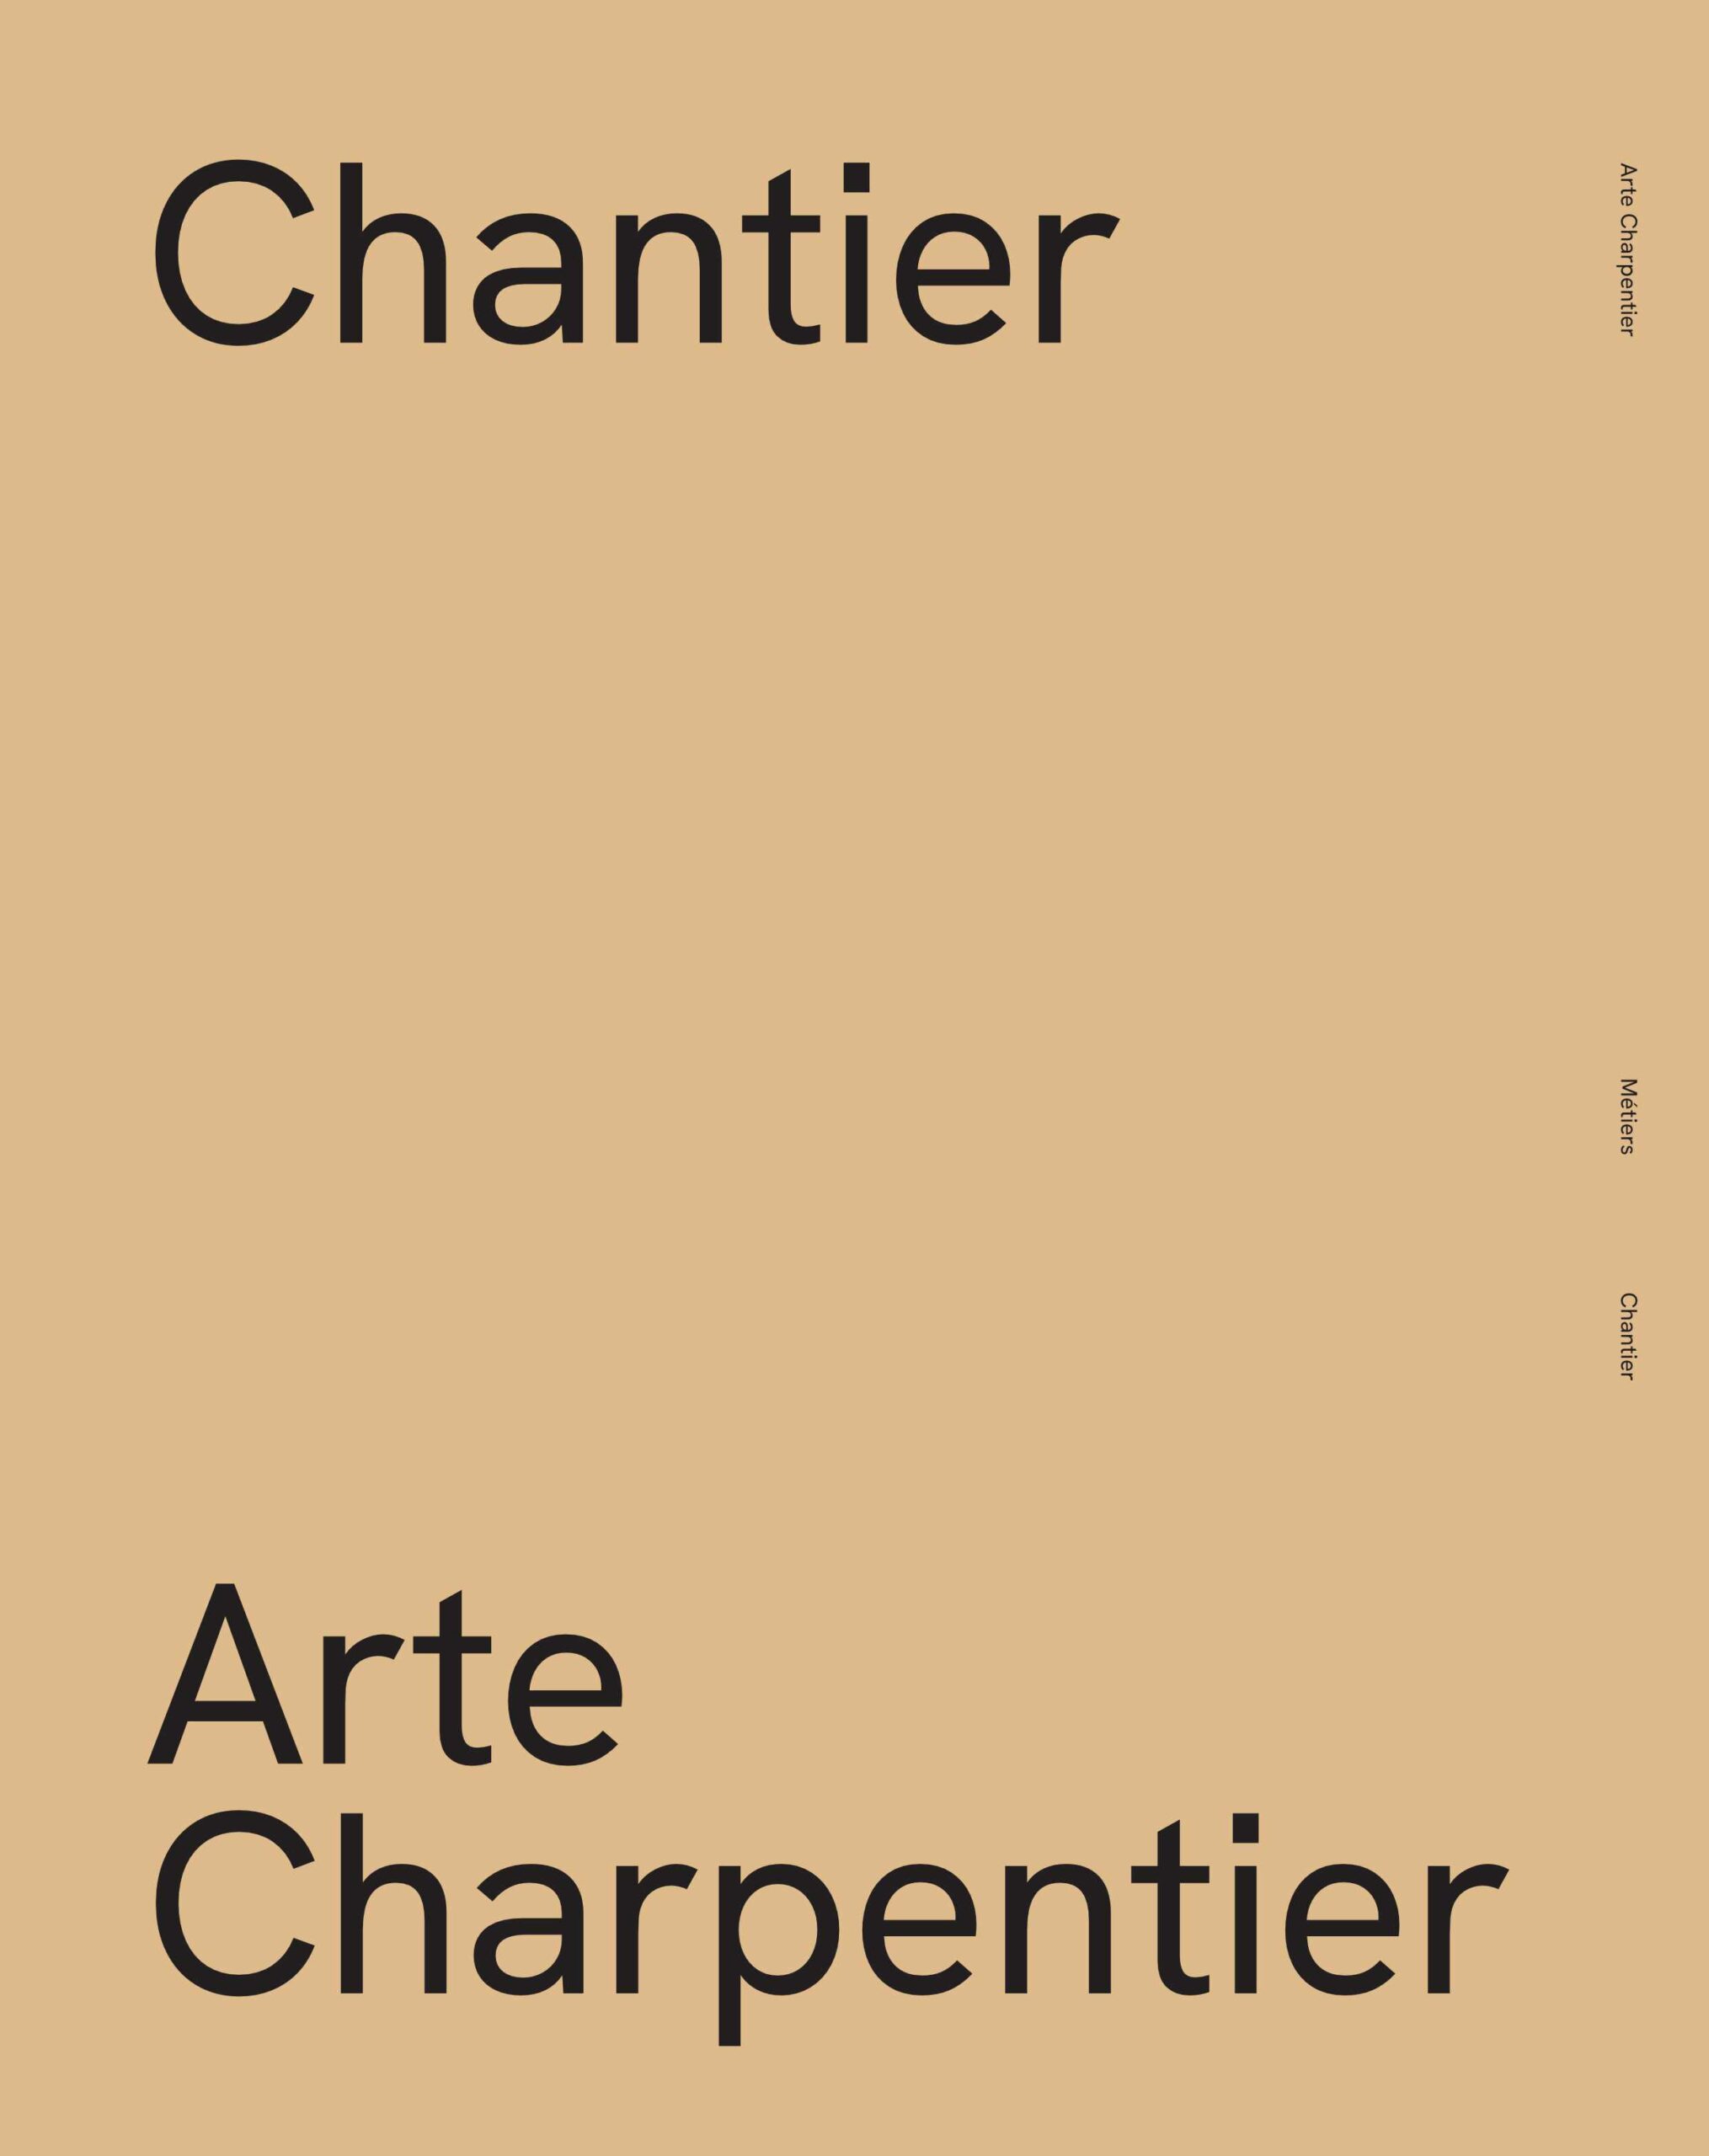 Book Chantiers Arte Charpentier